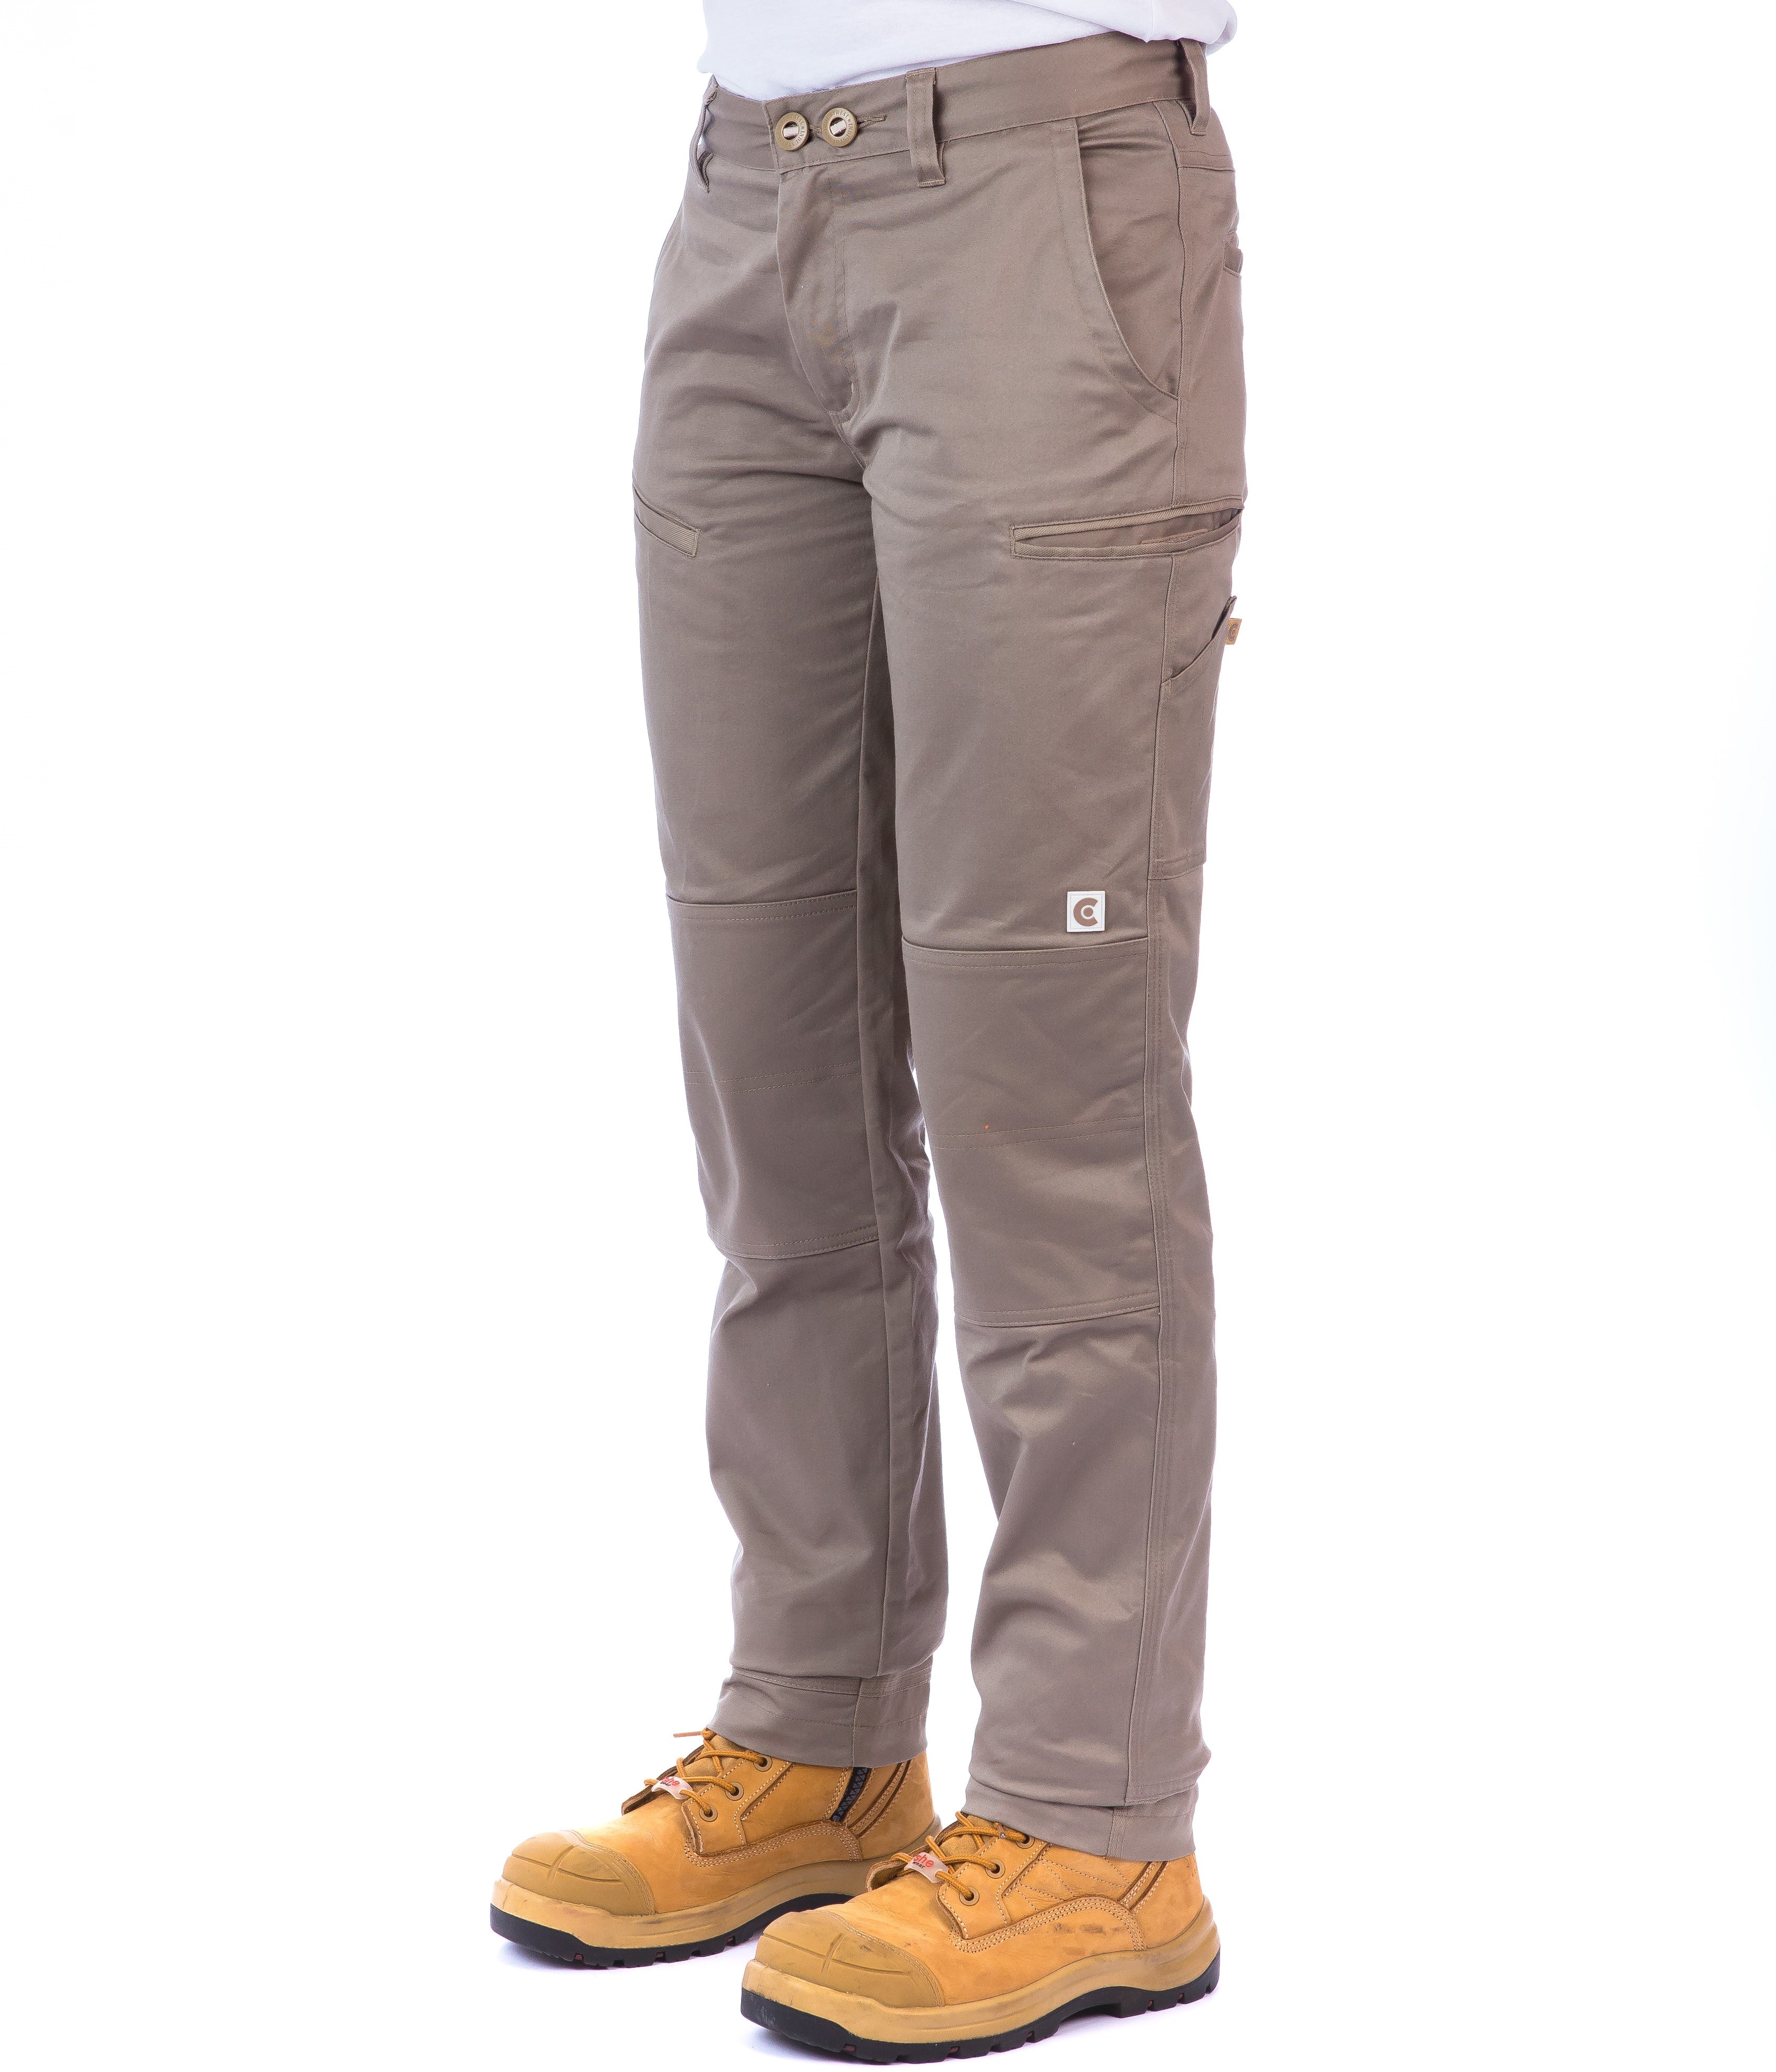 Rummyluckjp Men Sport Pants Casual Reflective Stripe Elastic Loose Running  Trousers Road Work High Visibility Overalls price in UAE | Amazon UAE |  kanbkam